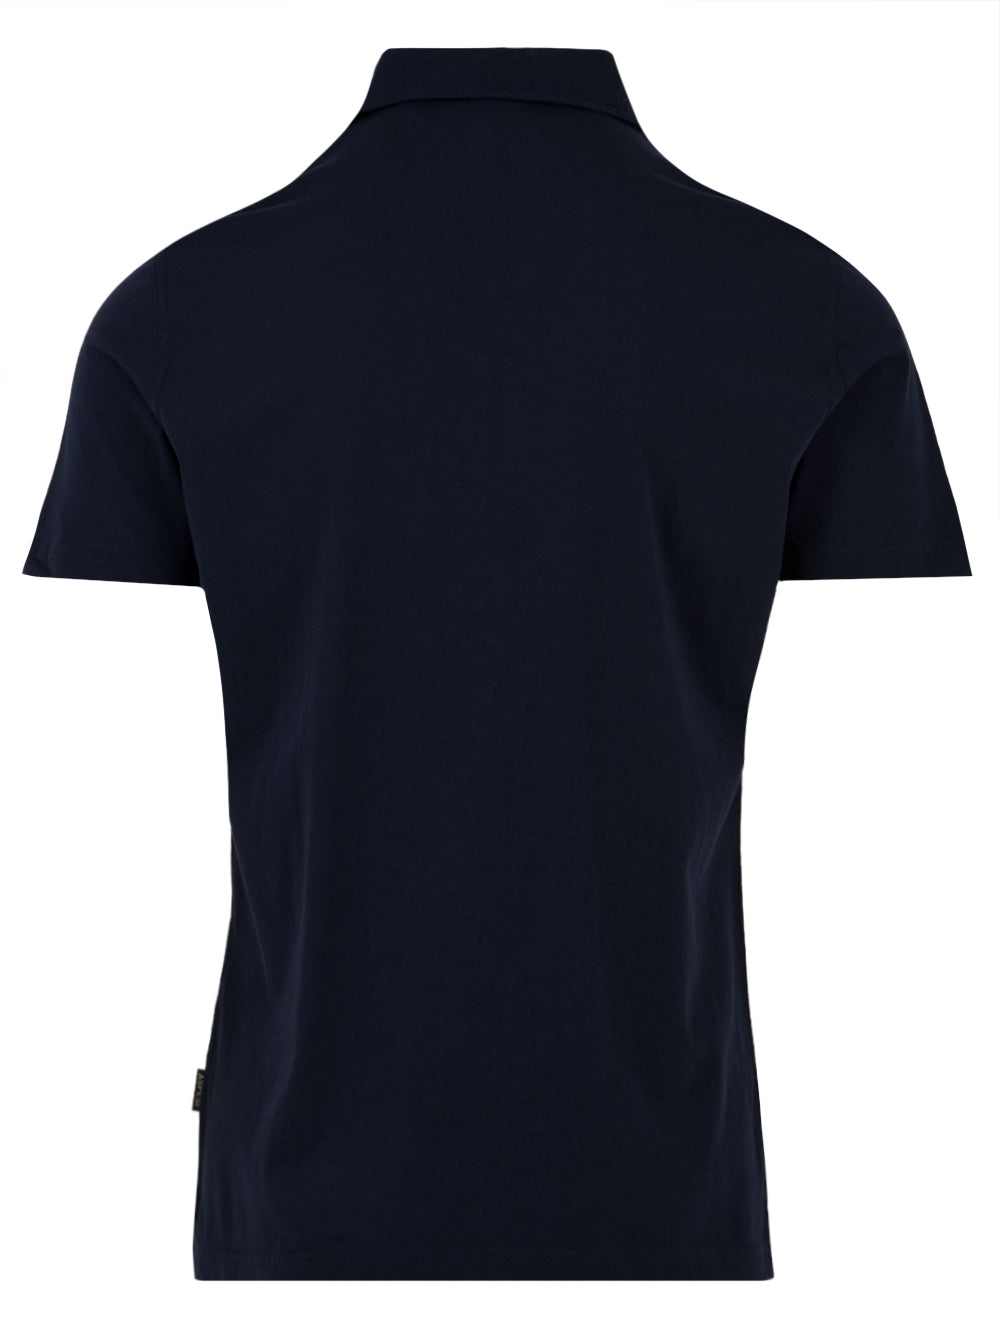 Men's polo shirt in plain cotton jersey